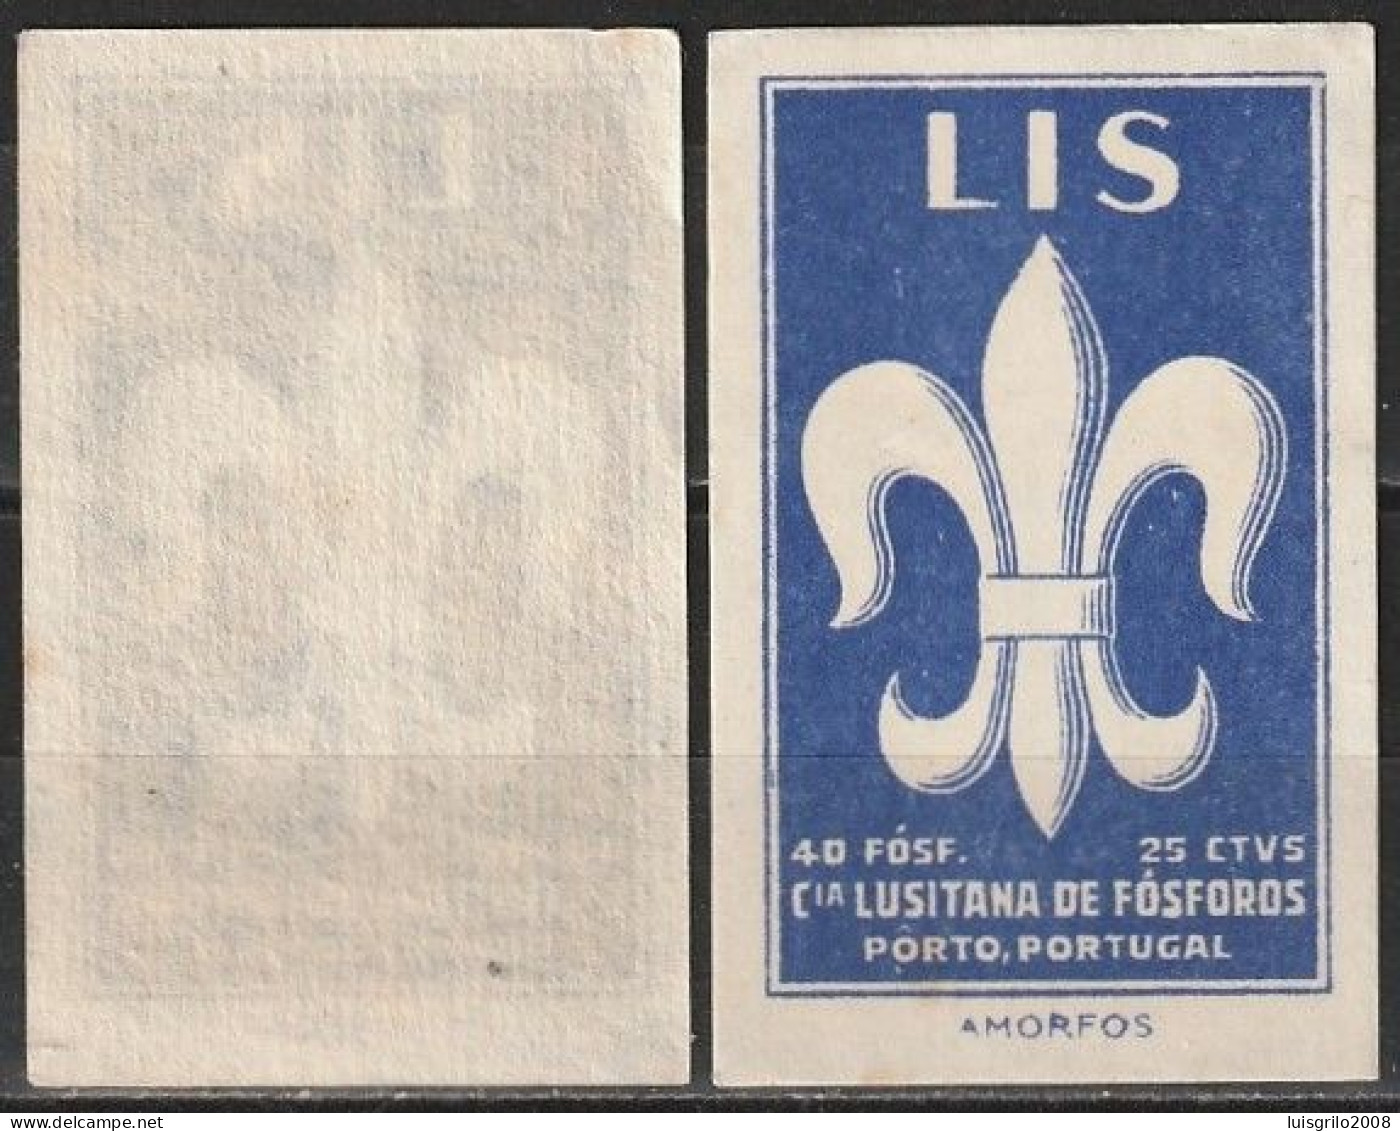 Vignette/ Étiquette, Portugal - Lis -|- Companhia Lusitana De Fósforos, Porto - Local Post Stamps